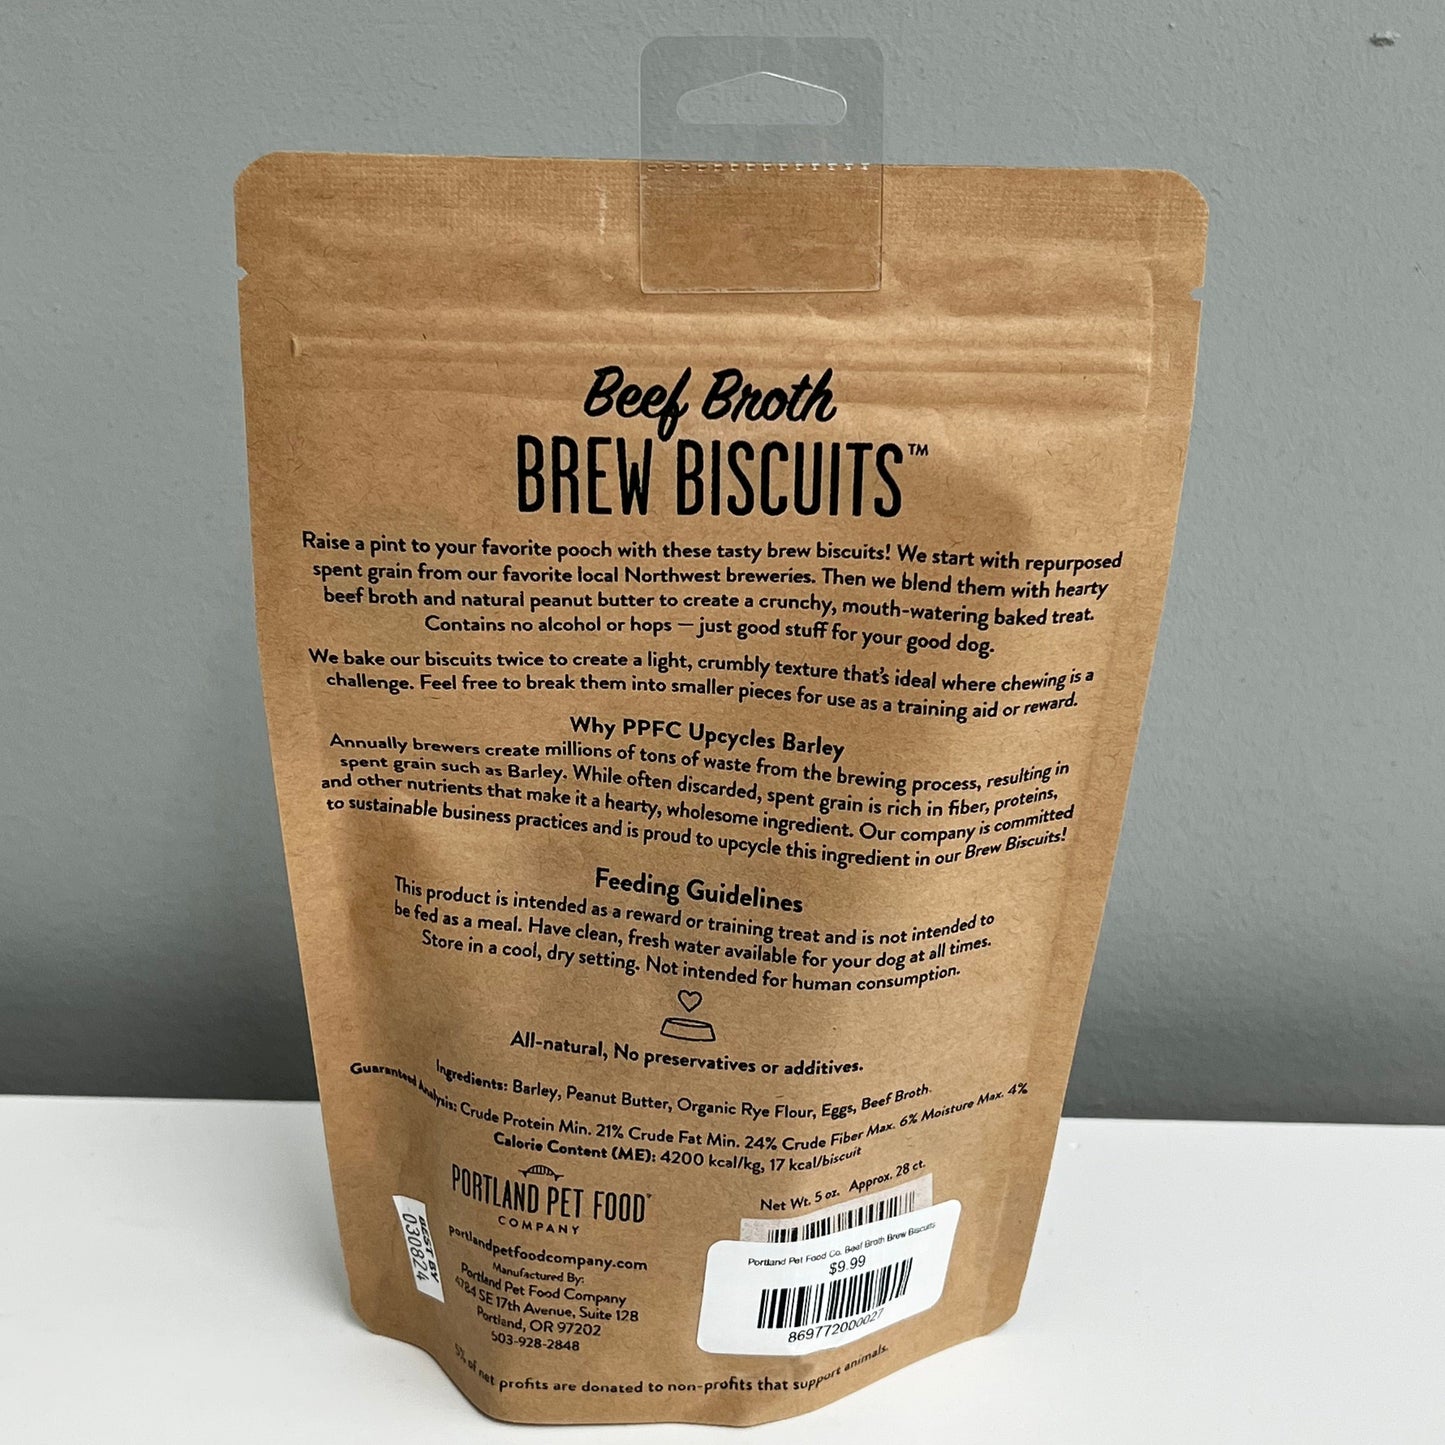 Portland Pet Food Co. Beef Broth Brew Biscuits